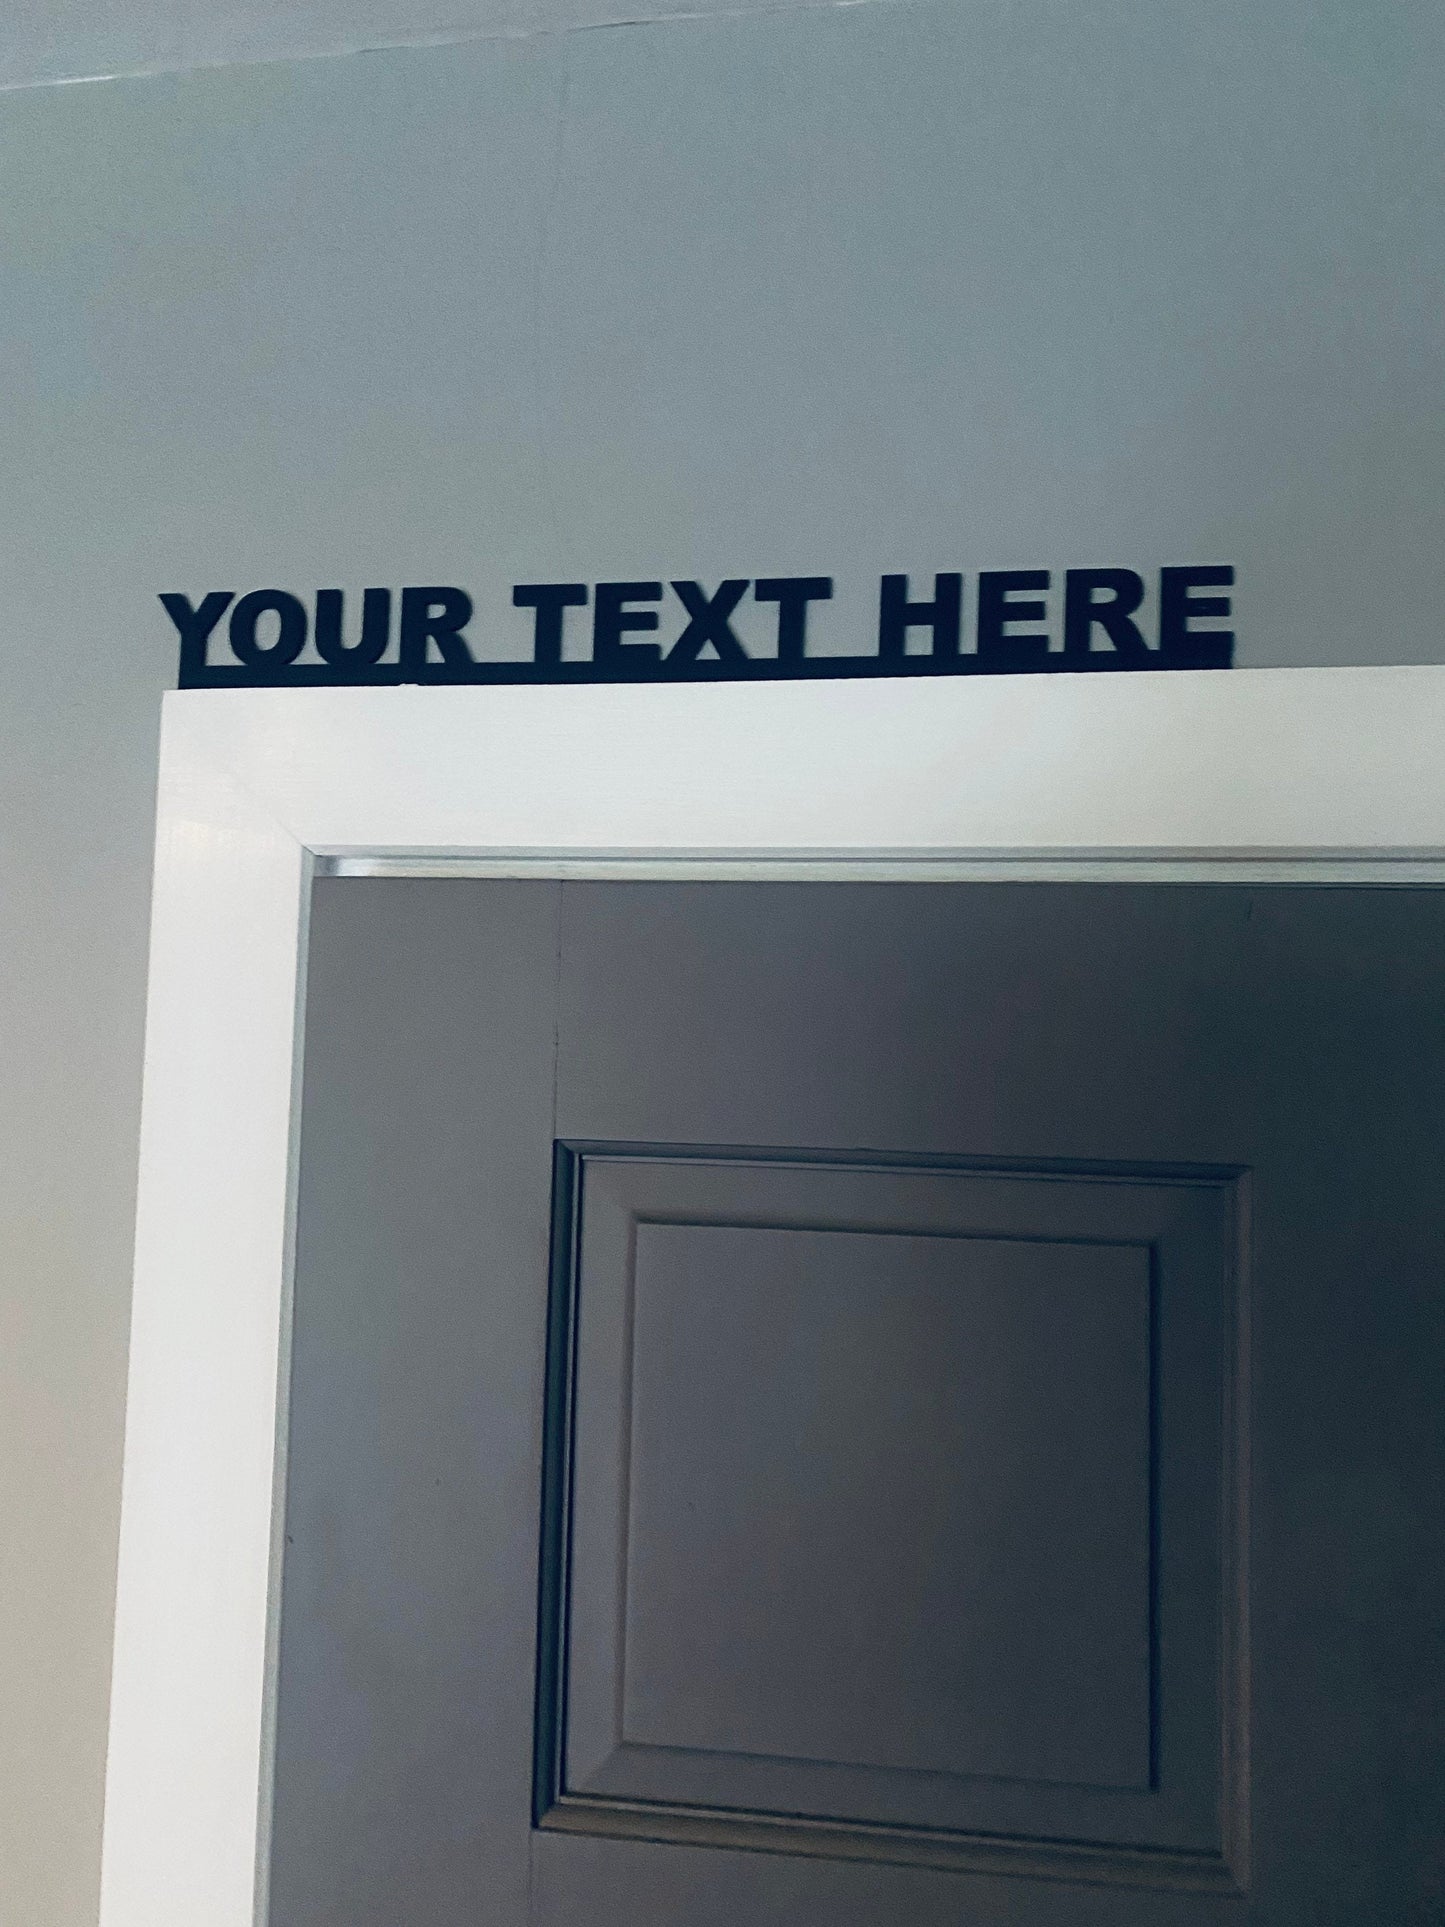 CUSTOM door topper, shelf decor, wall decor - add your own text.